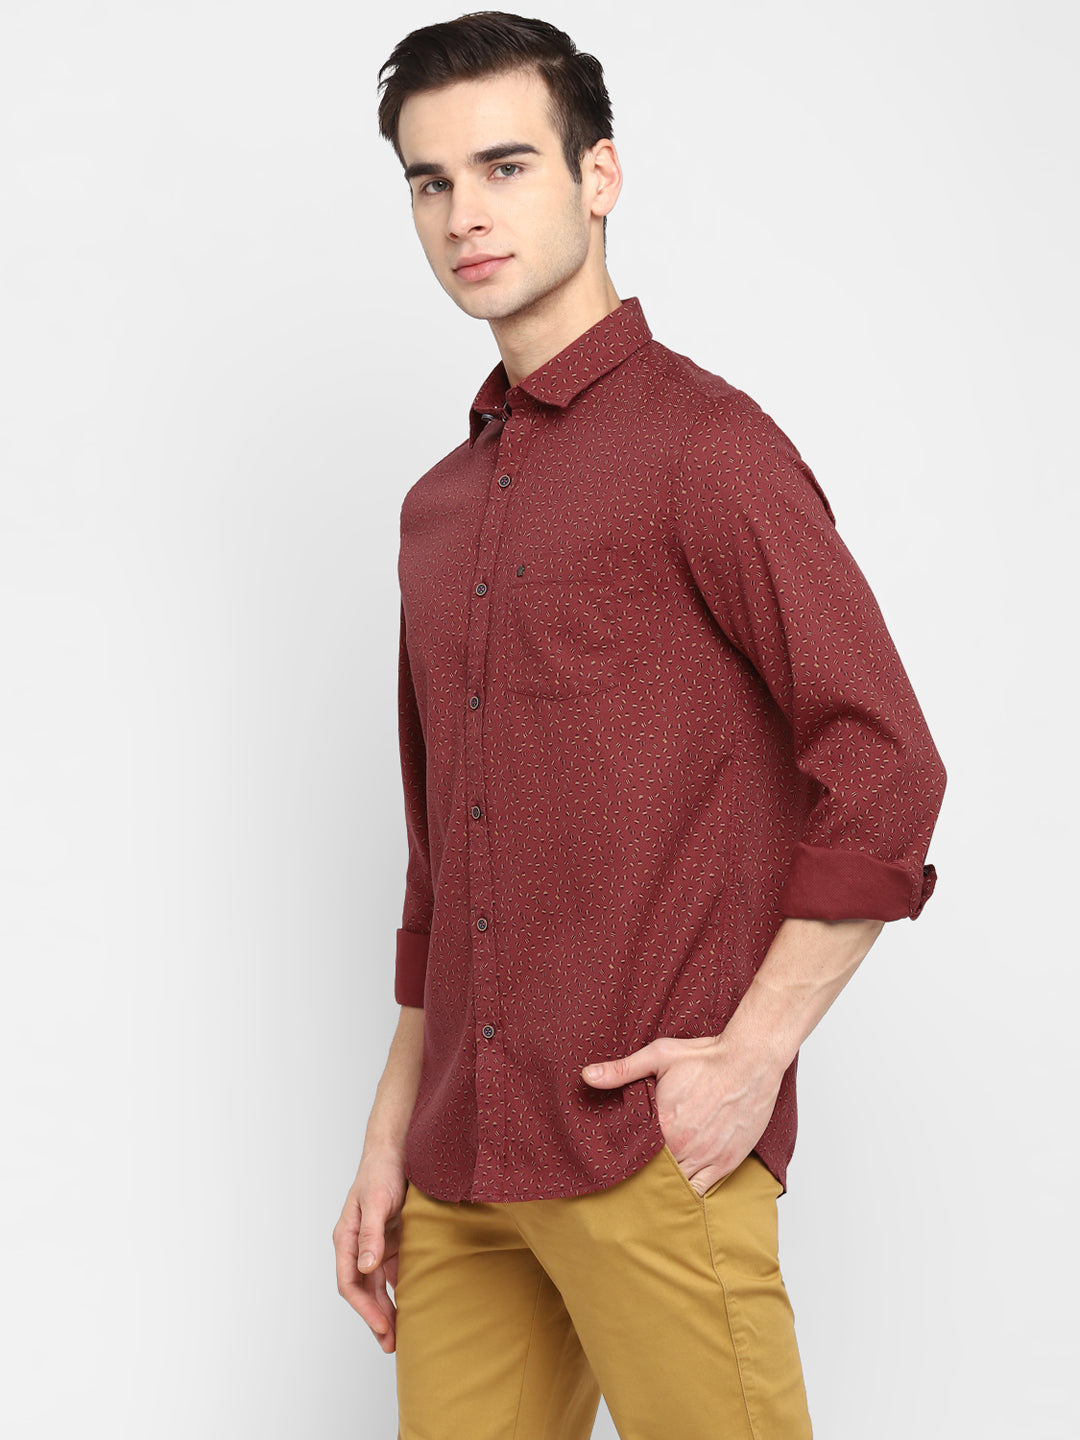 Printed Red Slim Fit Casual Shirt For Men